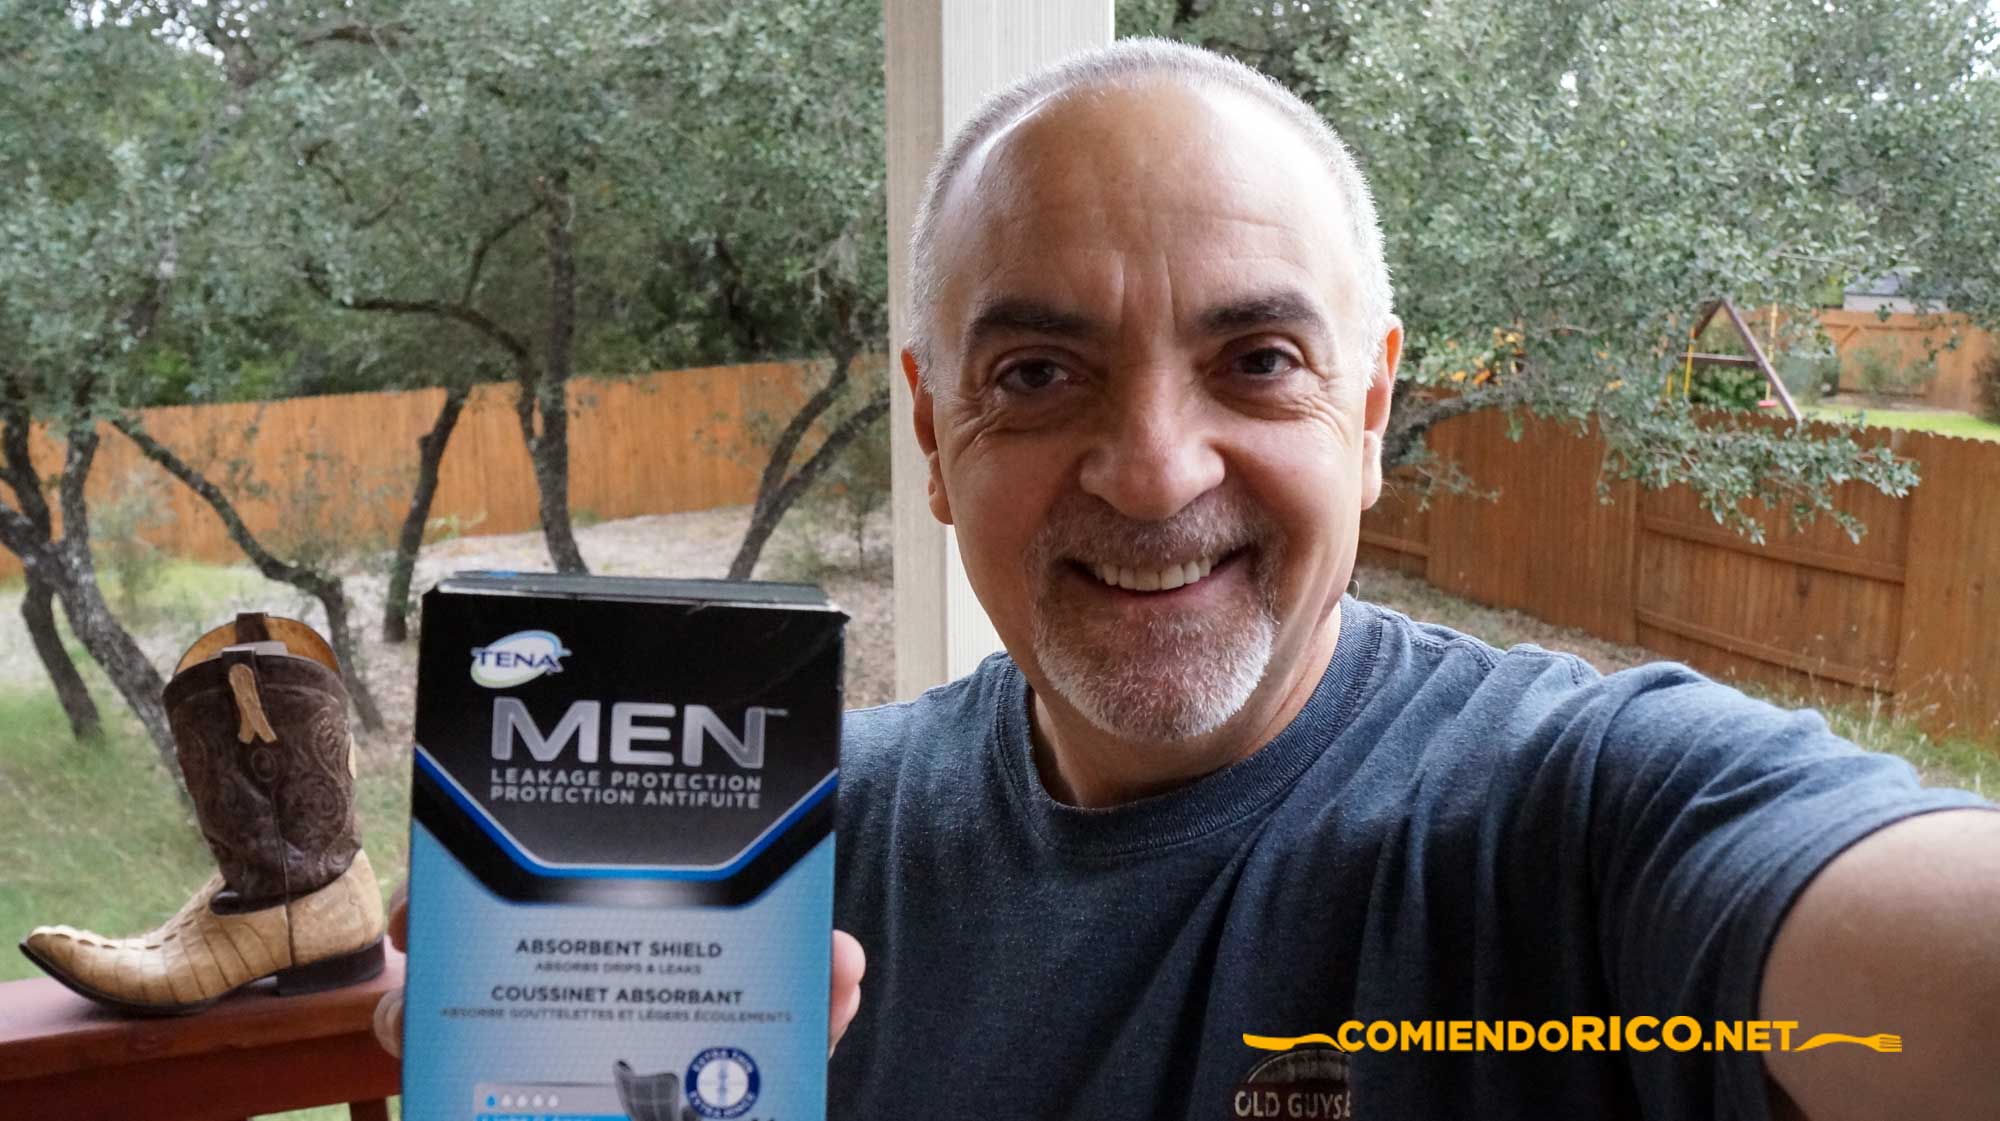 TENA® MEN™ Protective Shield, incontinencia urinaria